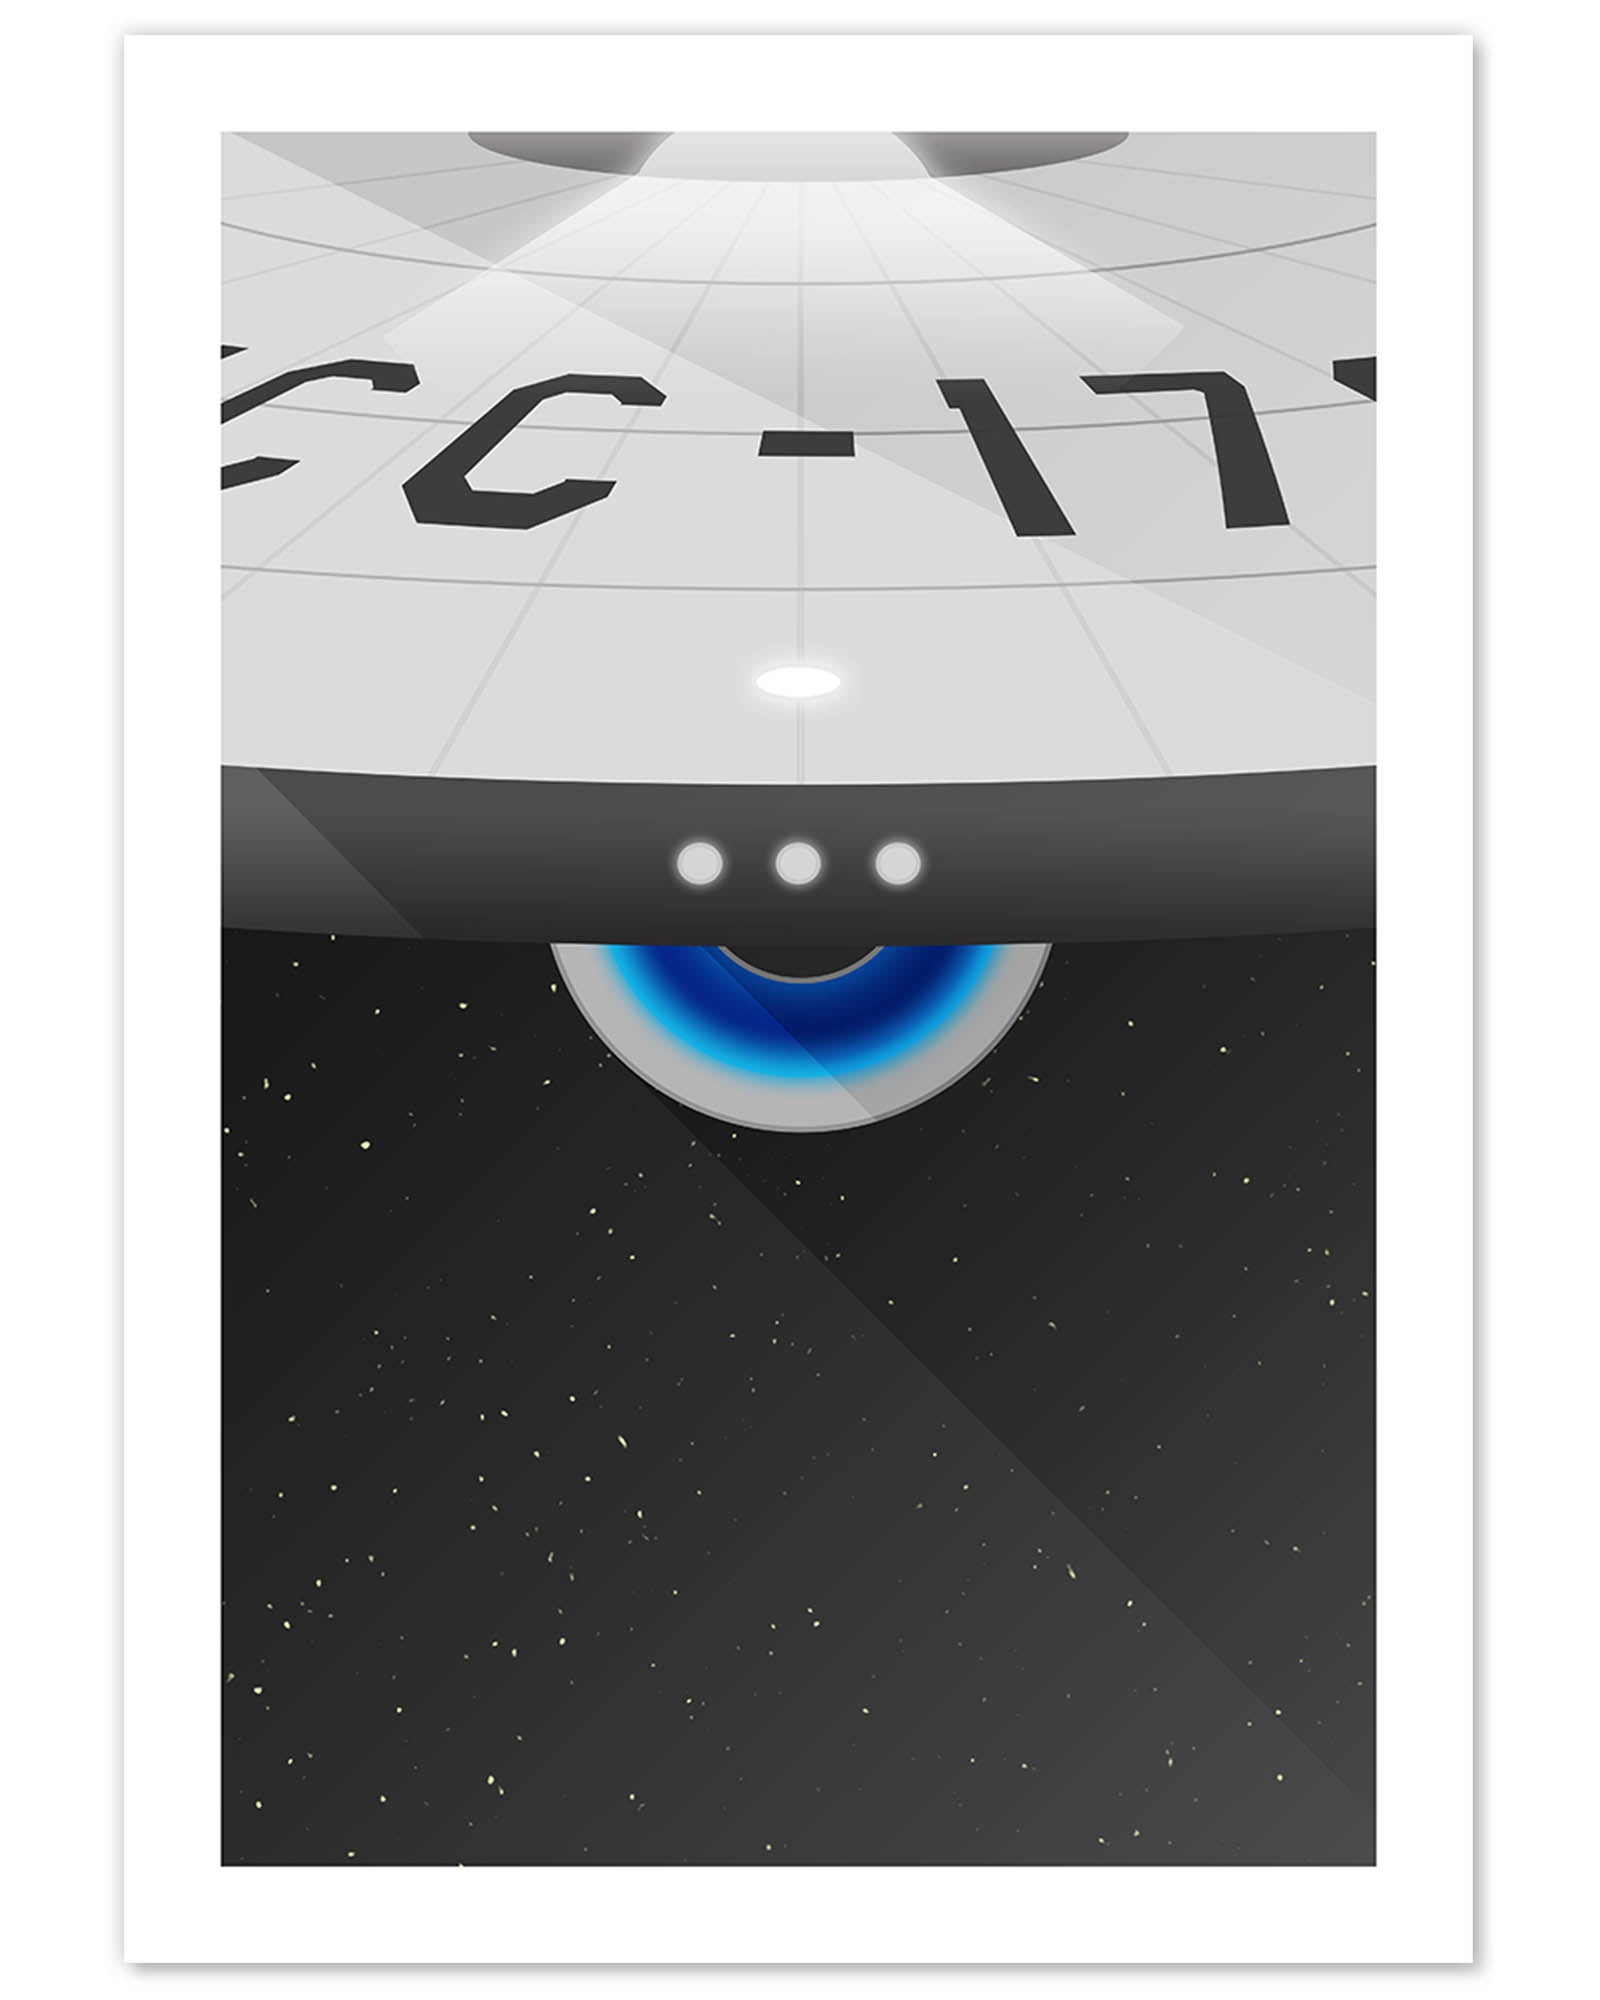 Star Trek Wallpaper Android (71+ images)